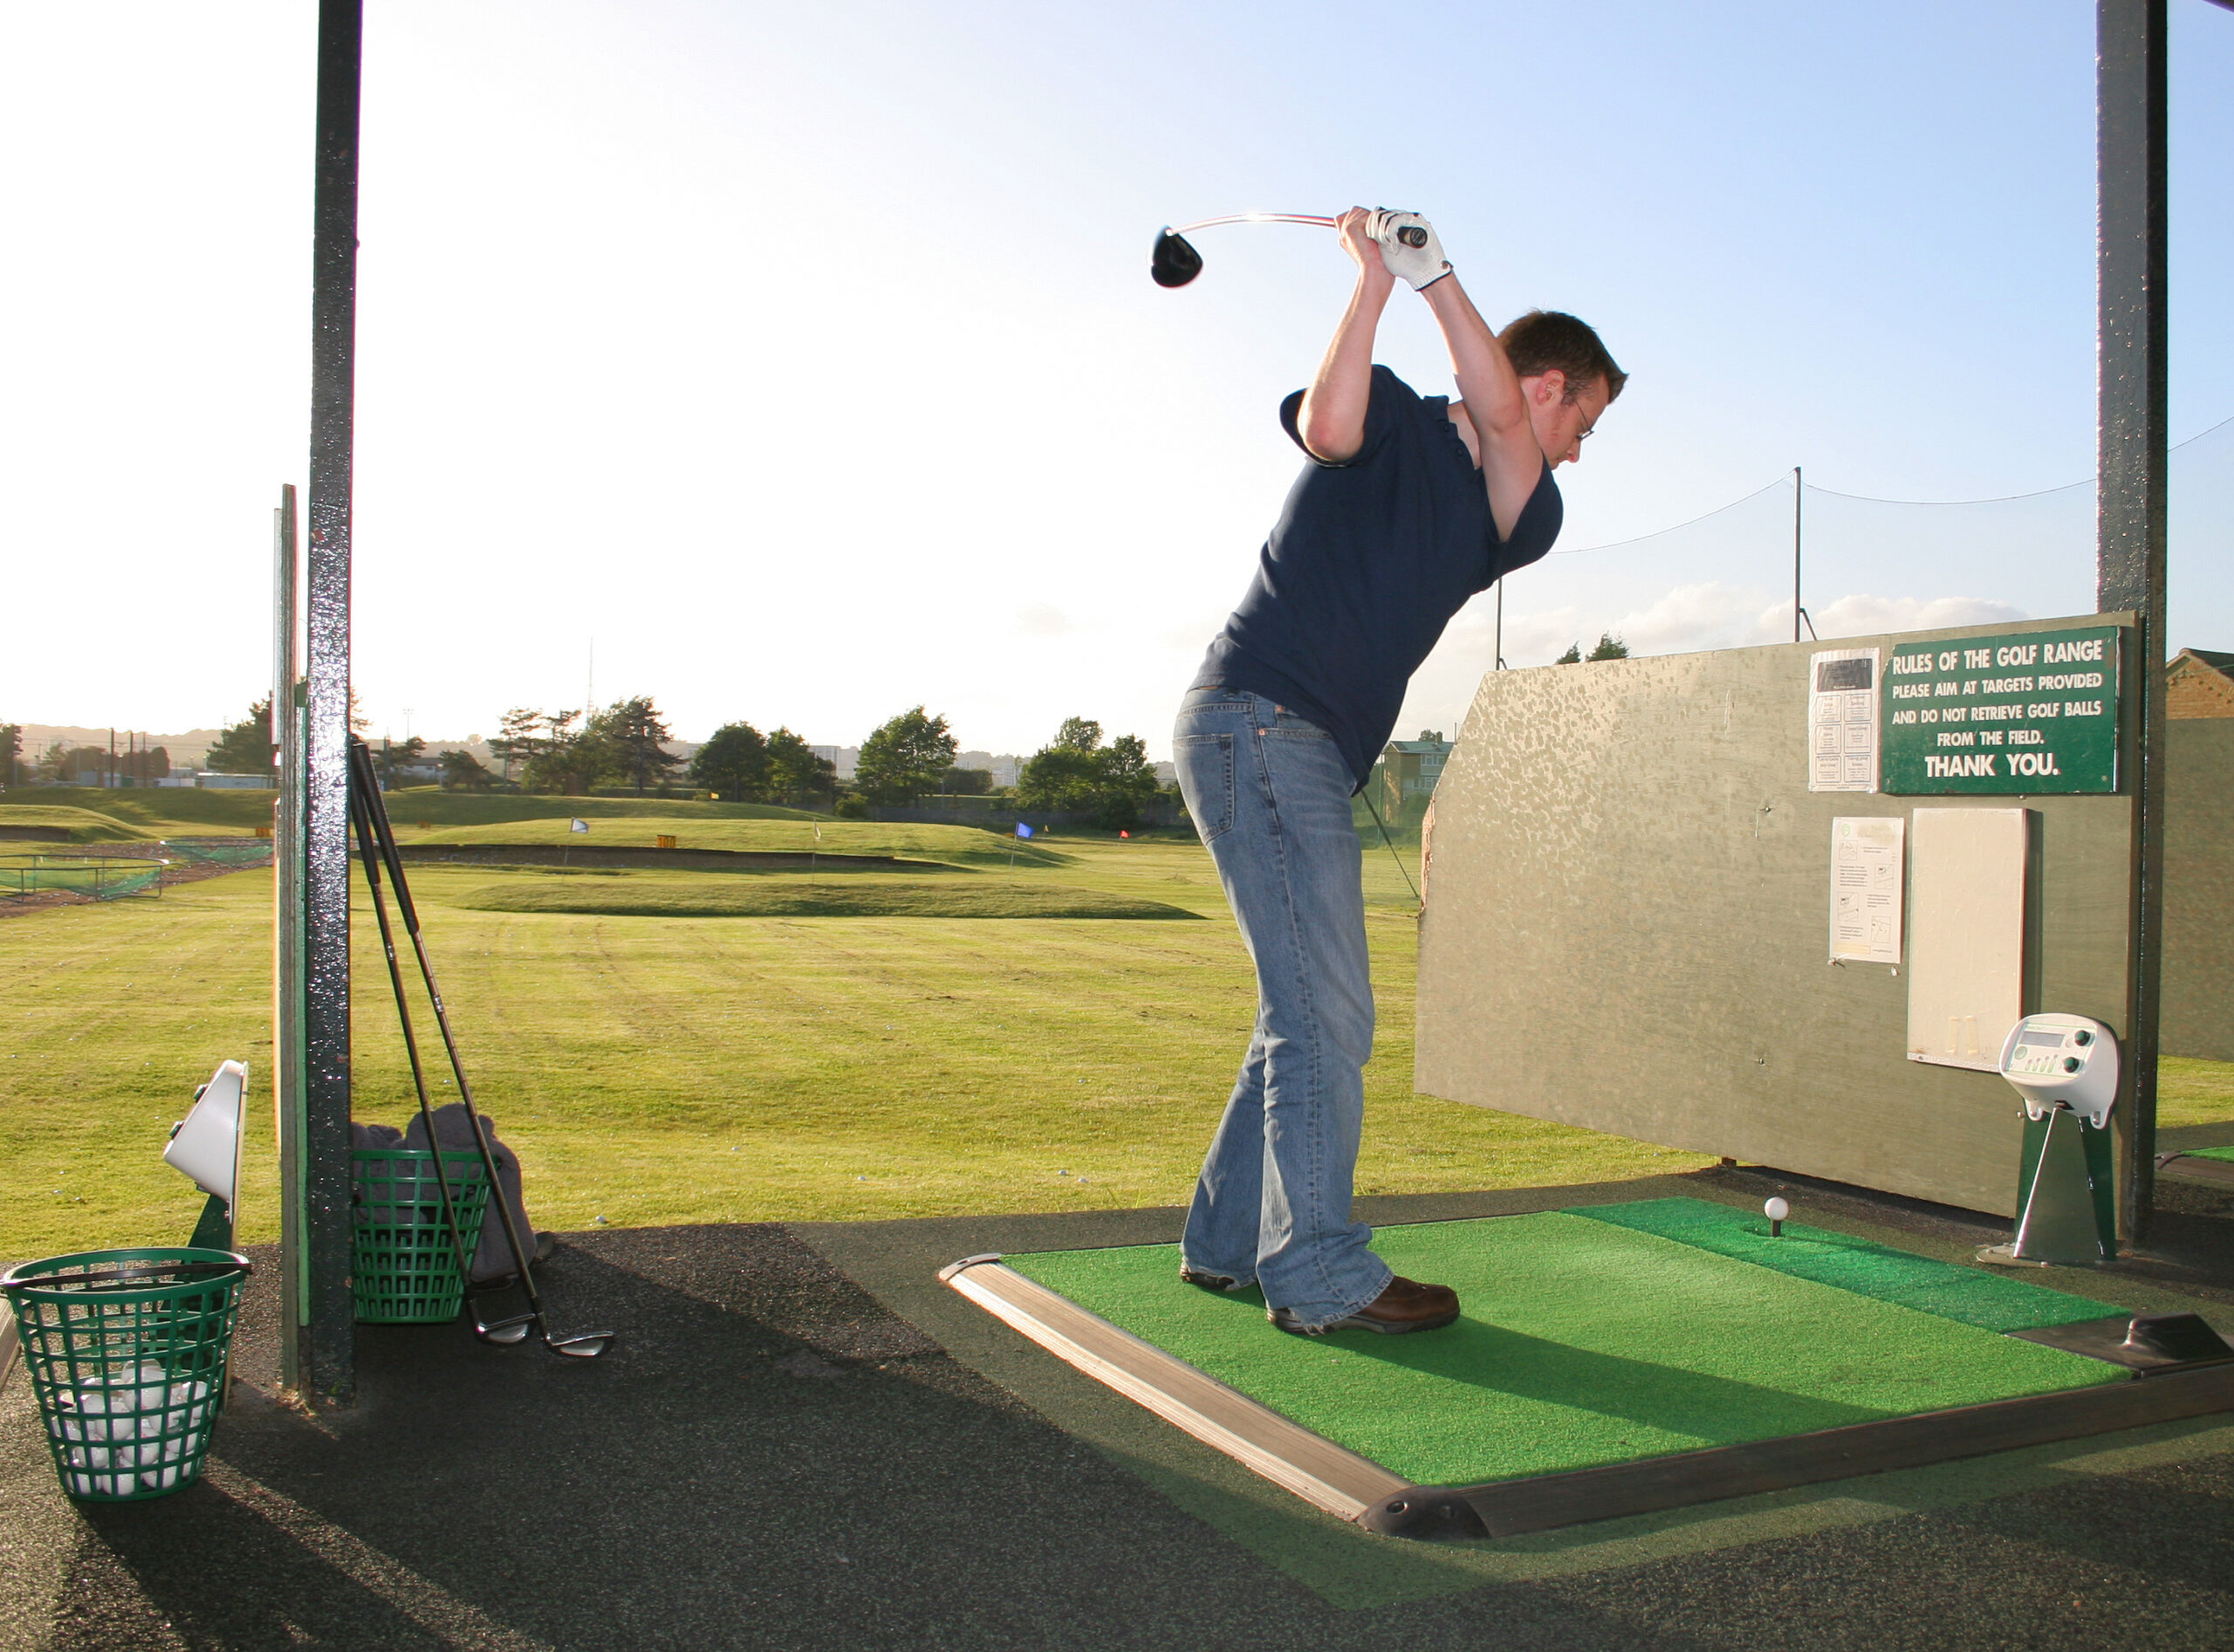 An image of a man hitting golf balls at a driving range.